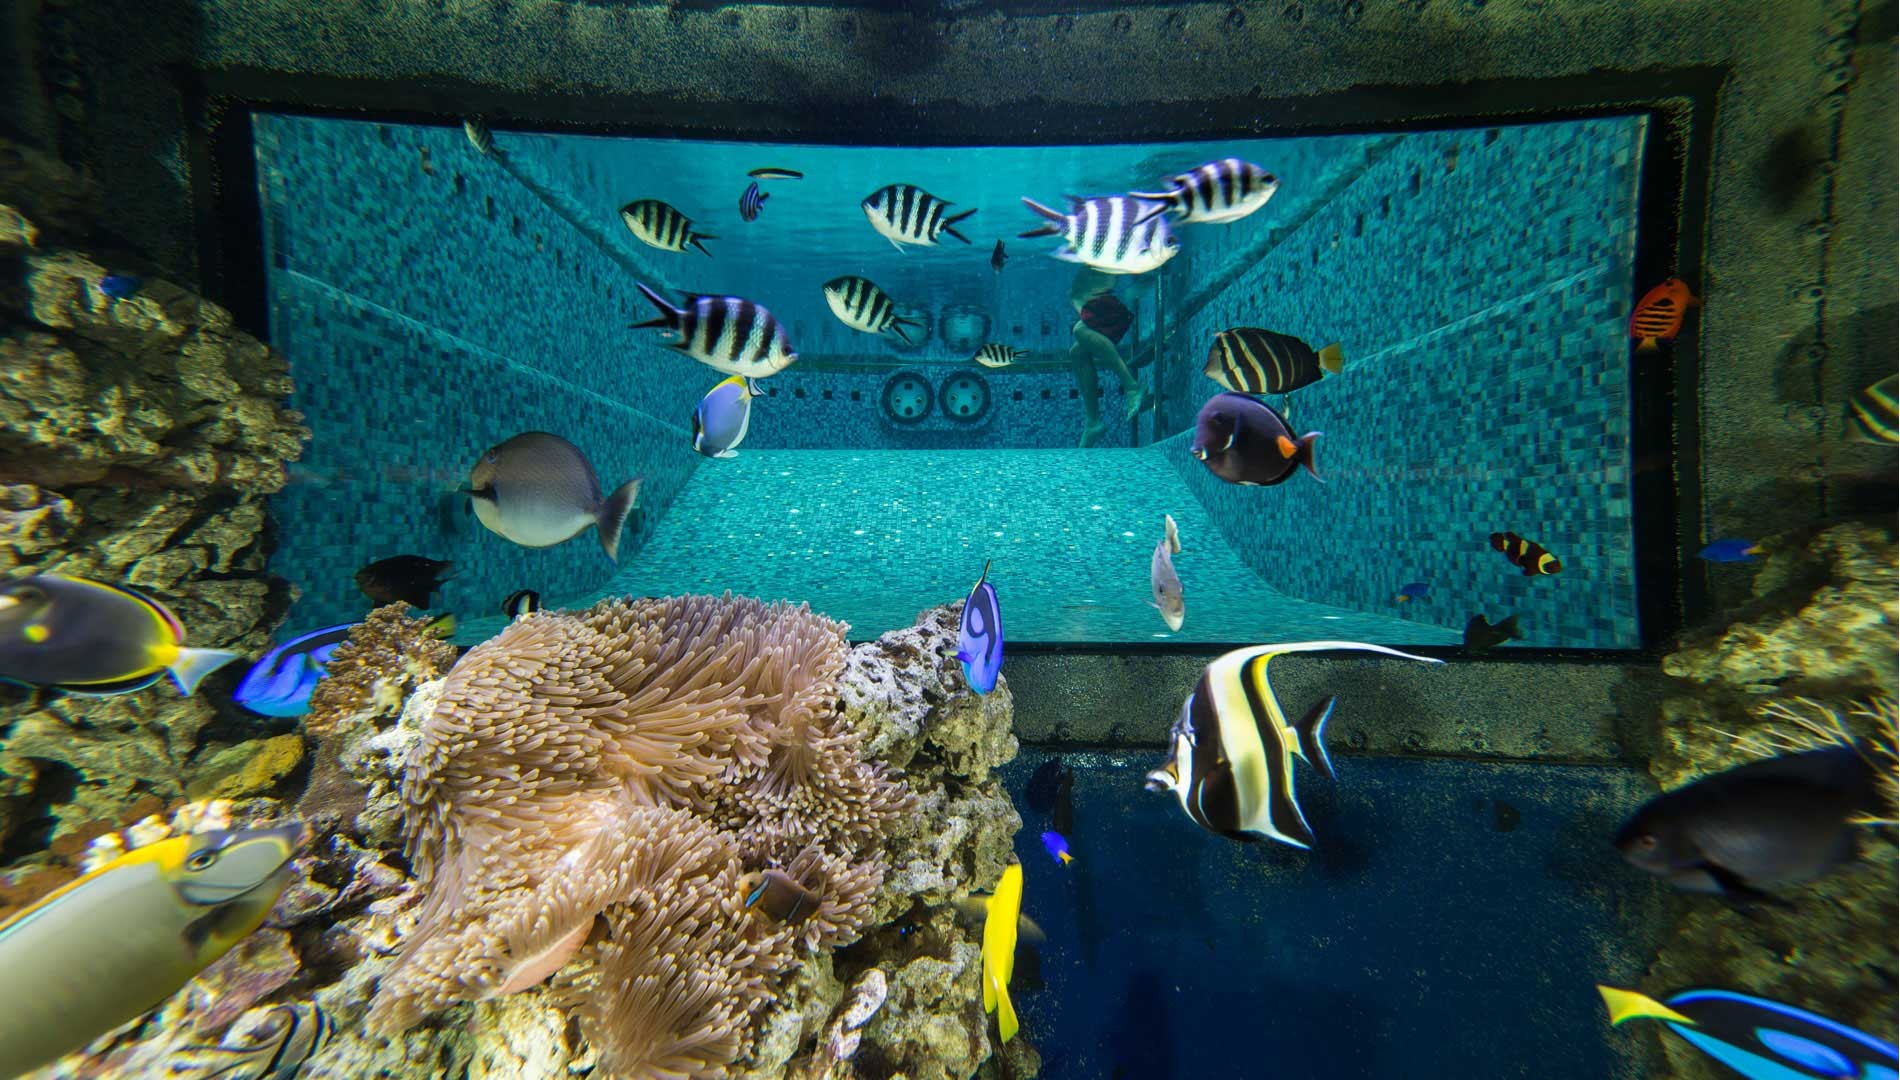 Aquarium And Mosaic Swimming Pool